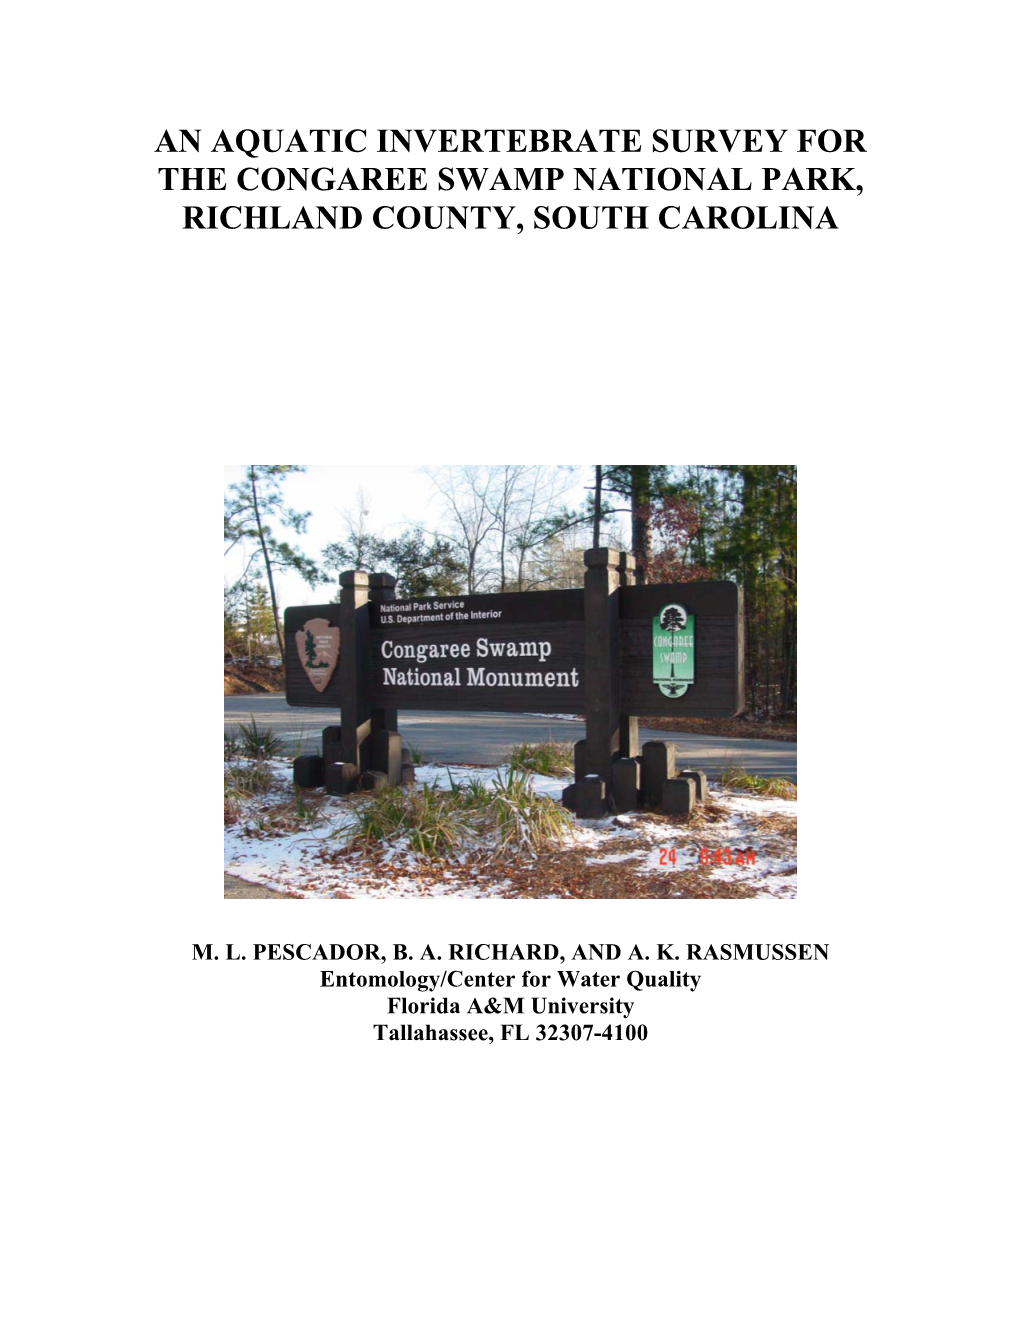 An Aquatic Invertebrate Survey for the Congaree Swamp National Park, Richland County, South Carolina